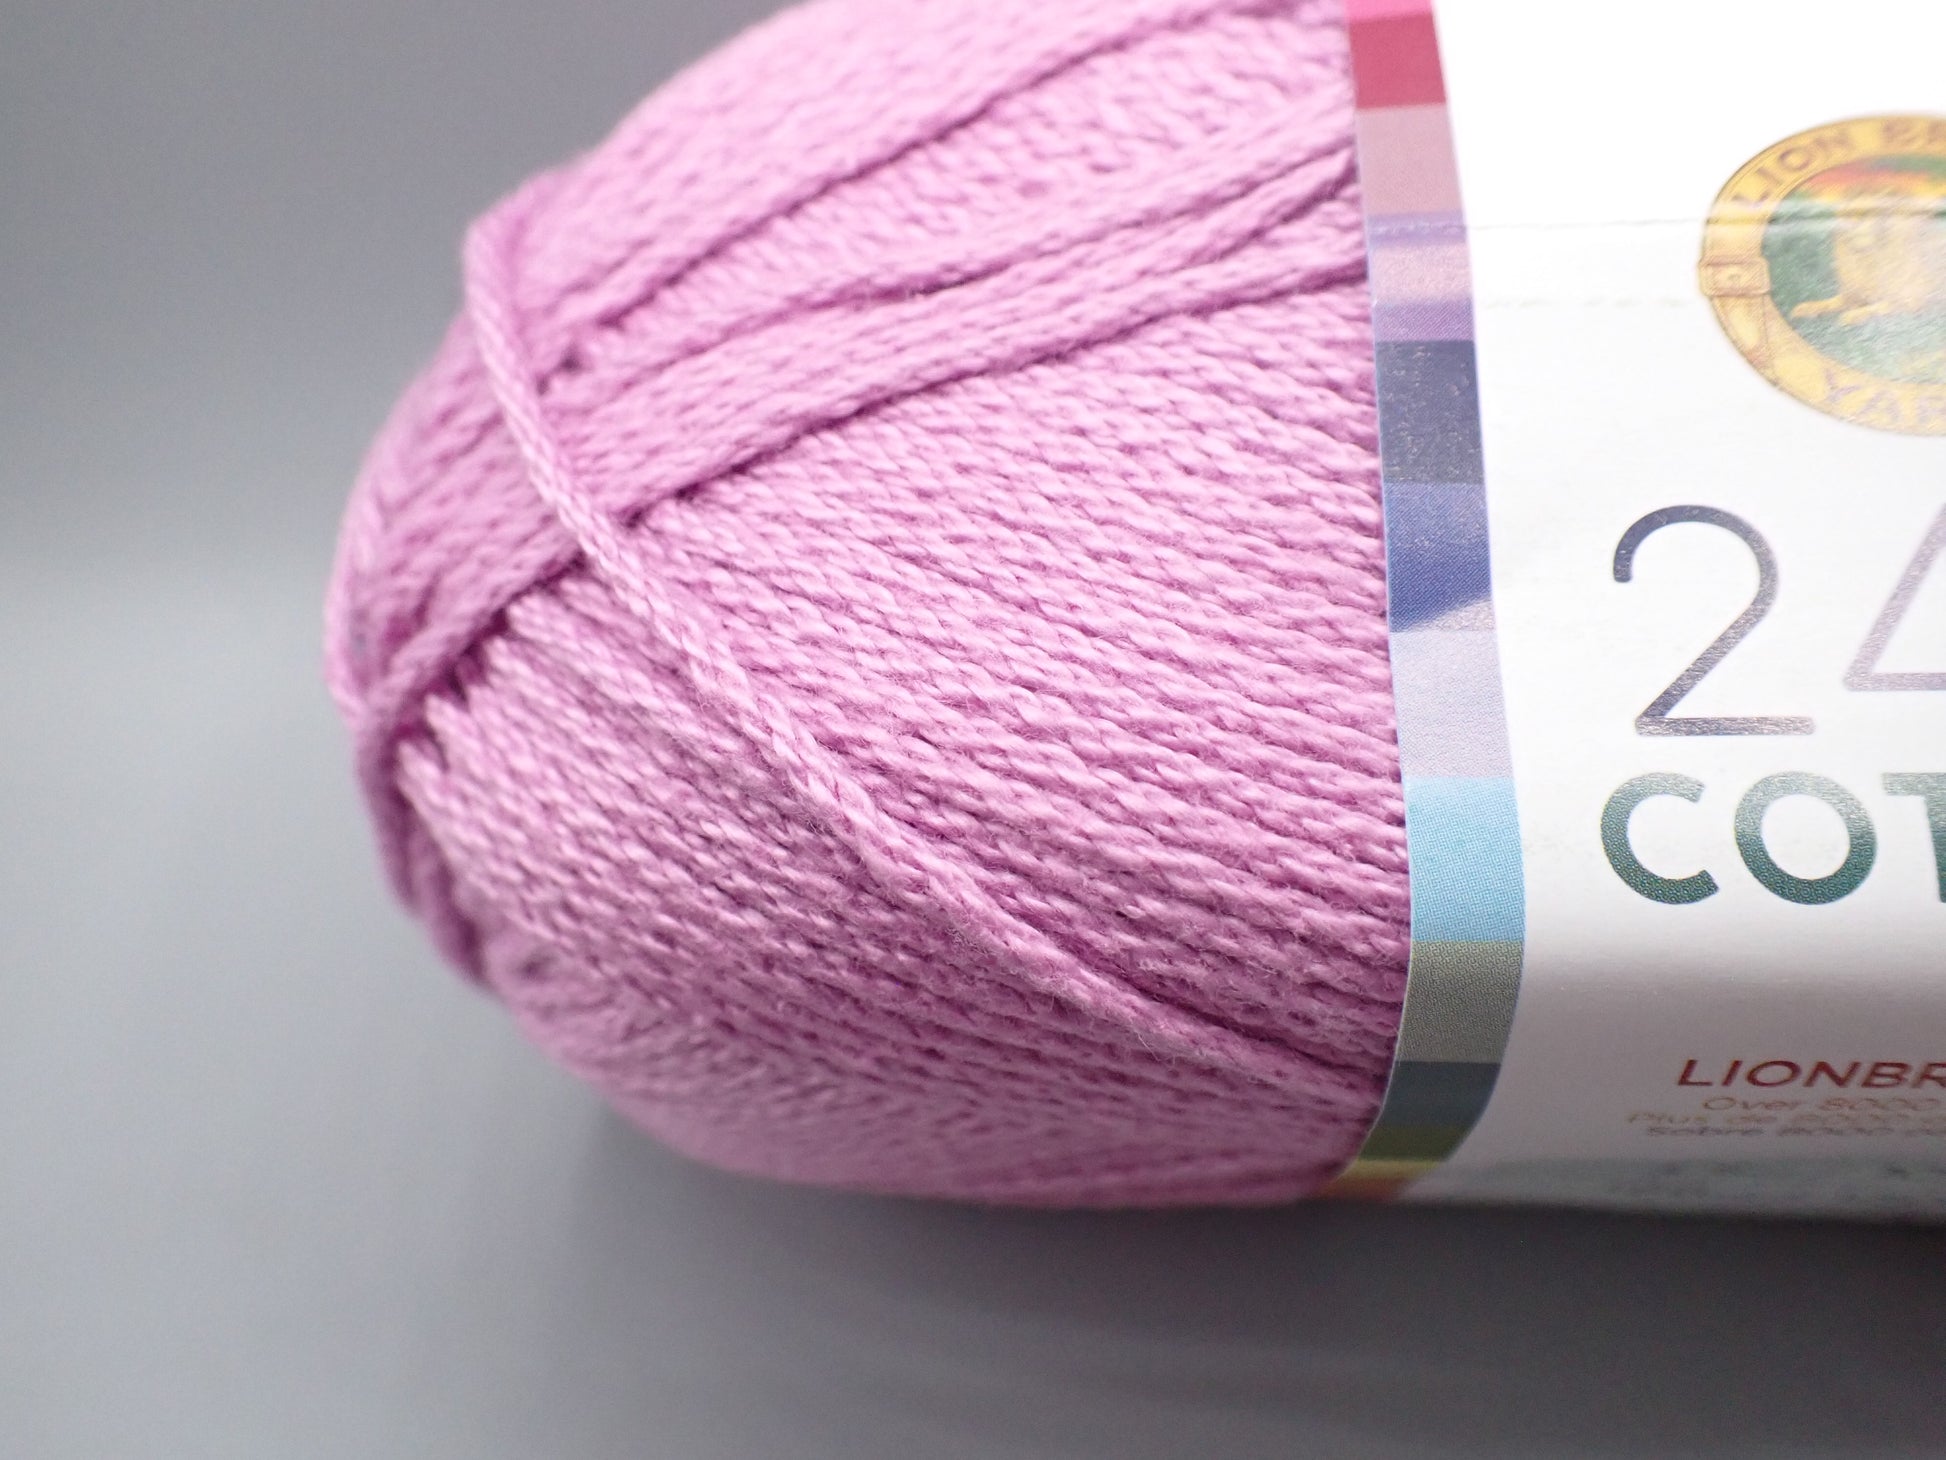 Lion Brand 24/7 Cotton Yarn Lot of 3 Lilac Purple Mercerized Cotton